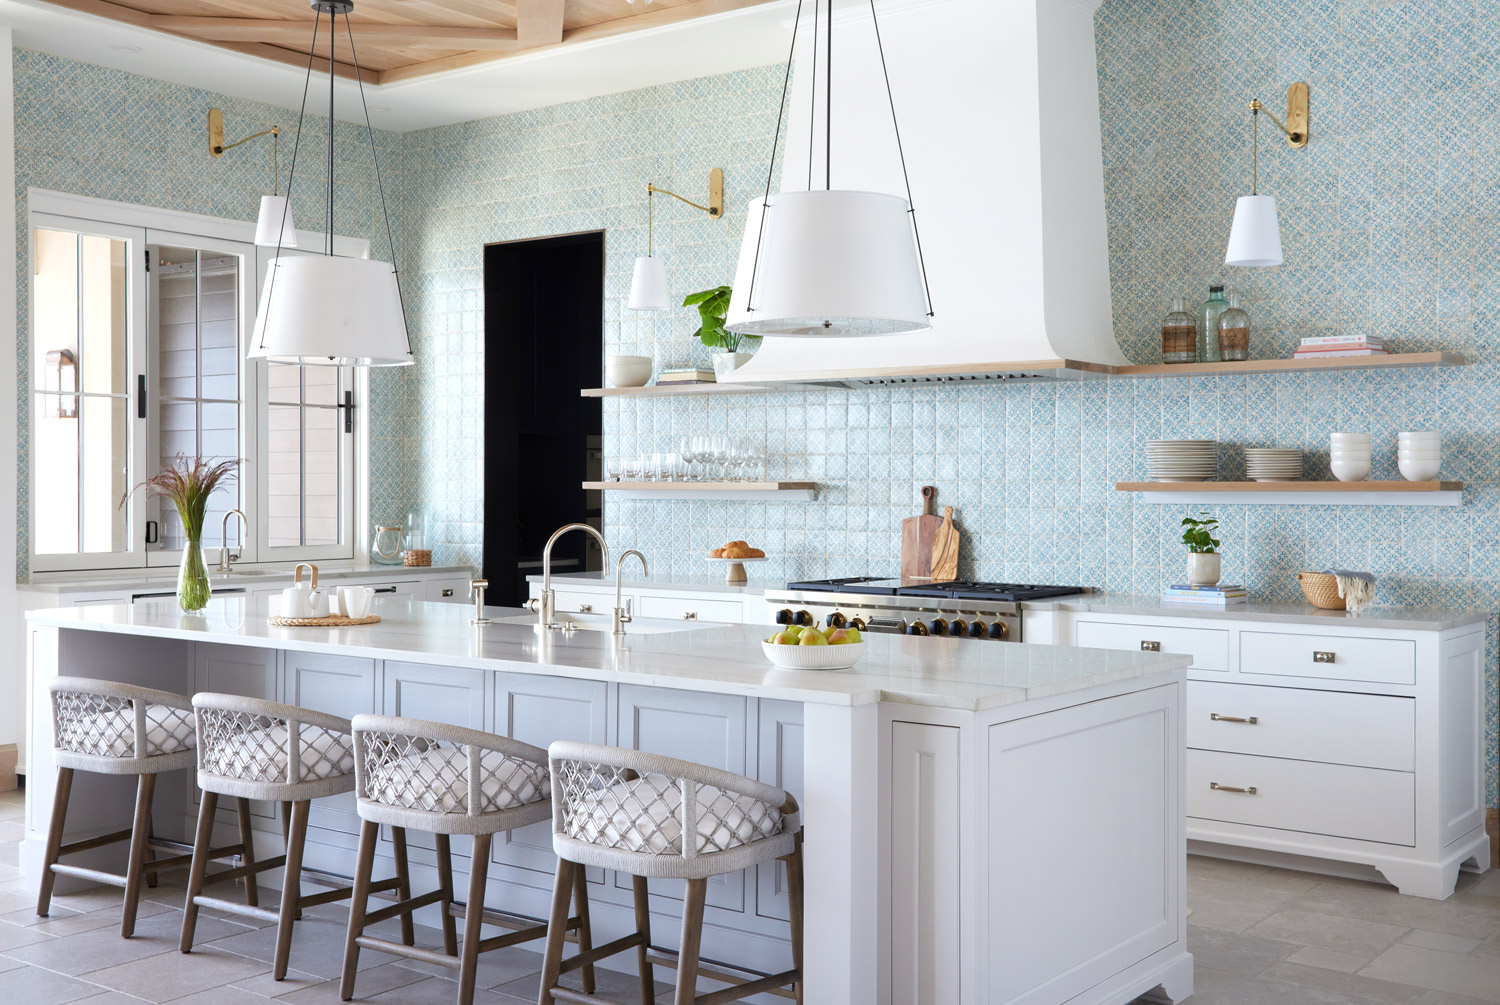 Ann Sachs tile in kitchen by designer Annie Downing by interior photographer Buff Strickland